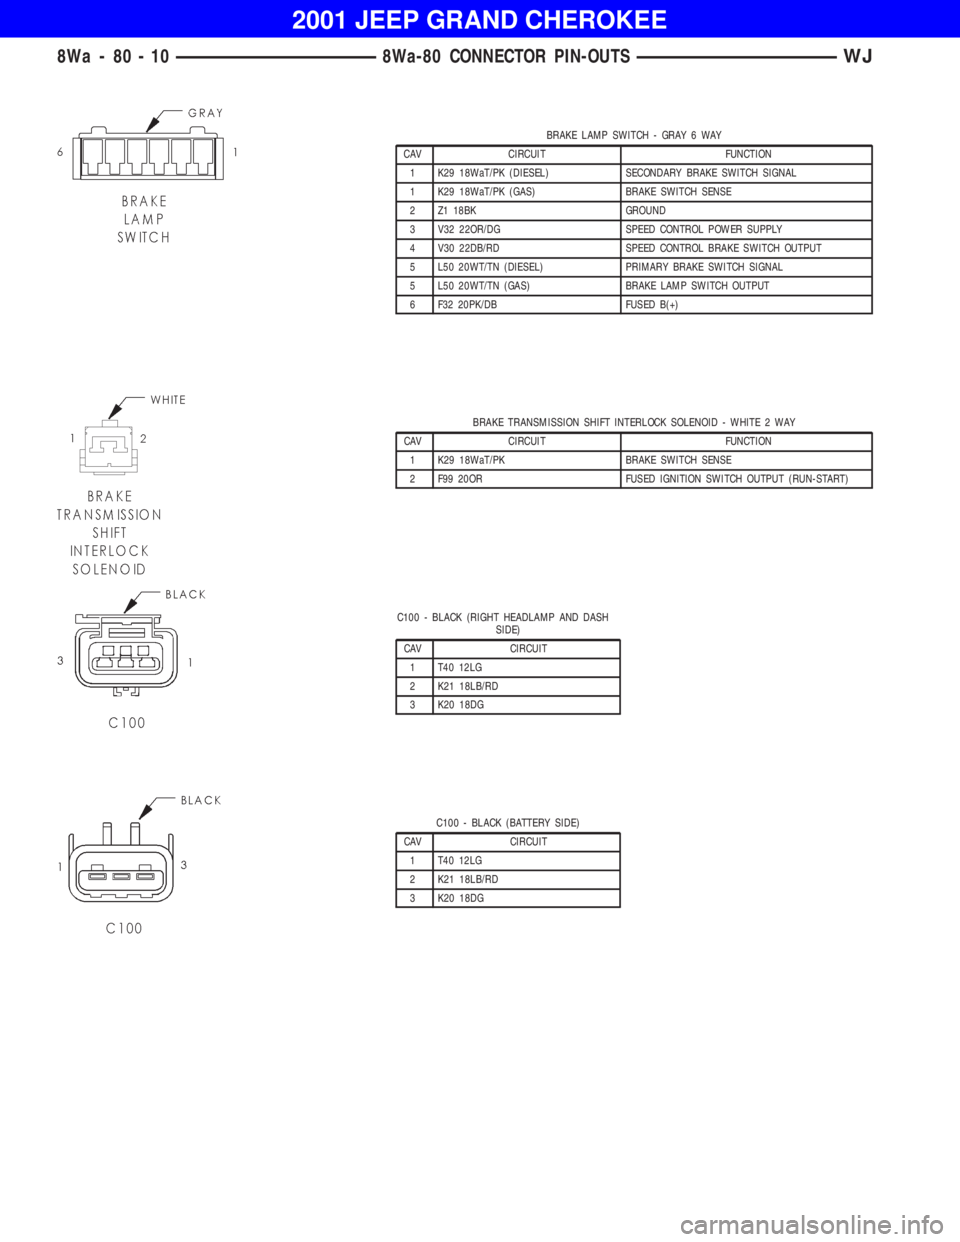 JEEP GRAND CHEROKEE 2001  Owners Manual BRAKE TRANSMISSION SHIFT INTERLOCK SOLENOID - WHITE 2 WAY
CAV CIRCUIT FUNCTION
1 K29 18WaT/PK BRAKE SWITCH SENSE
2 F99 20OR FUSED IGNITION SWITCH OUTPUT (RUN-START)
C100 - BLACK (RIGHT HEADLAMP AND DA